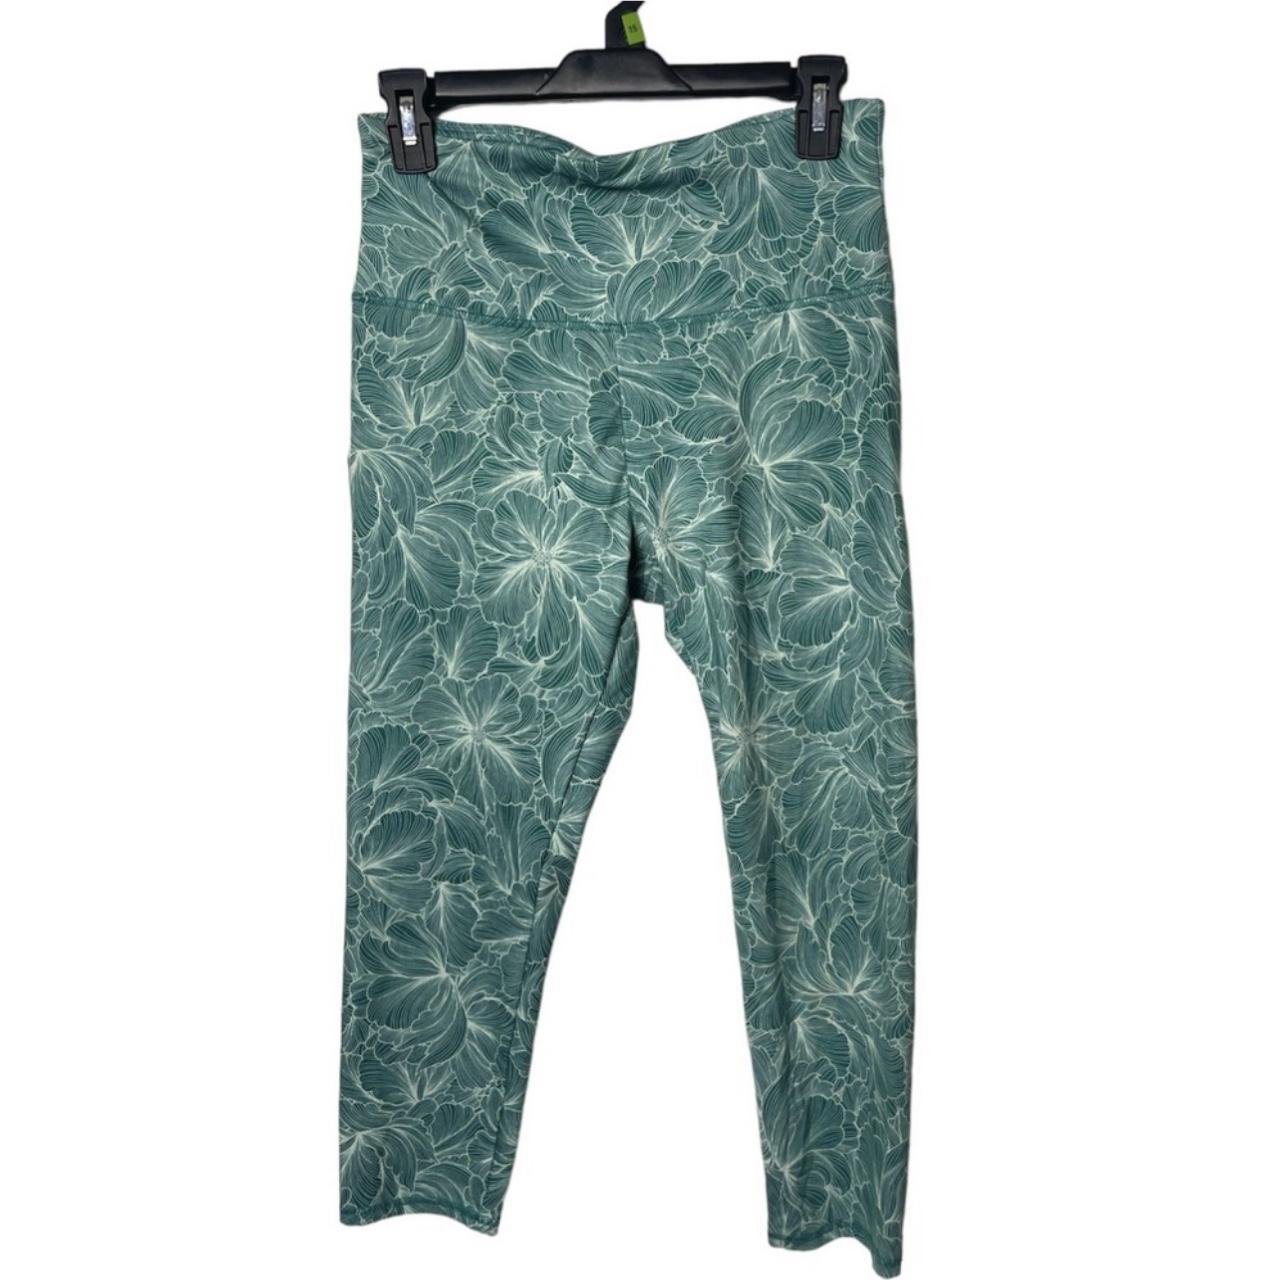 Women's leggings Balance Collection 89% Polyester 11% Spandex 